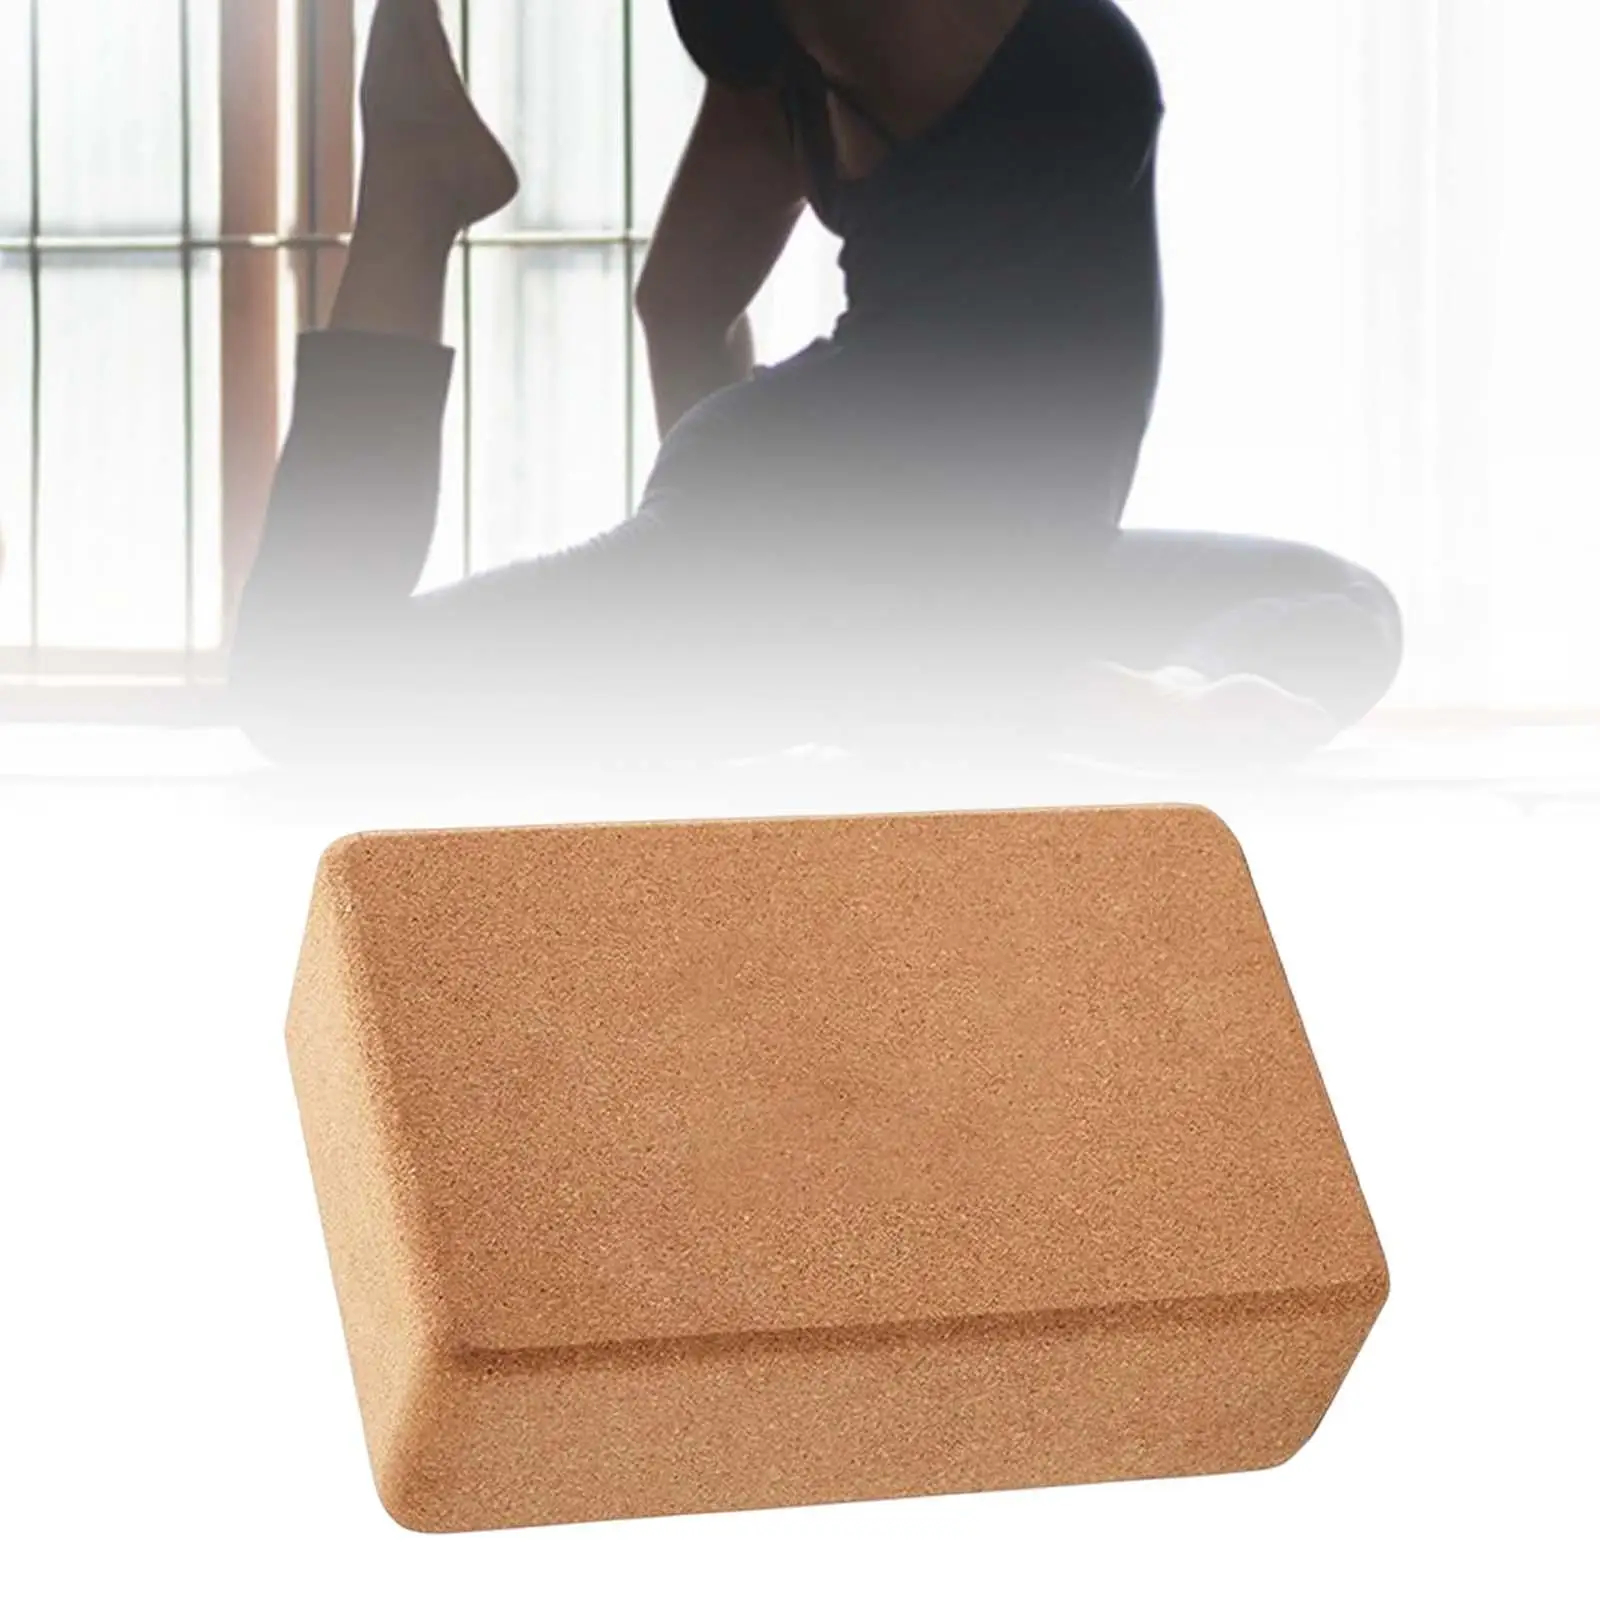 Cork Yoga Brick High Density Meditation Supportive for Stretching Gym Home